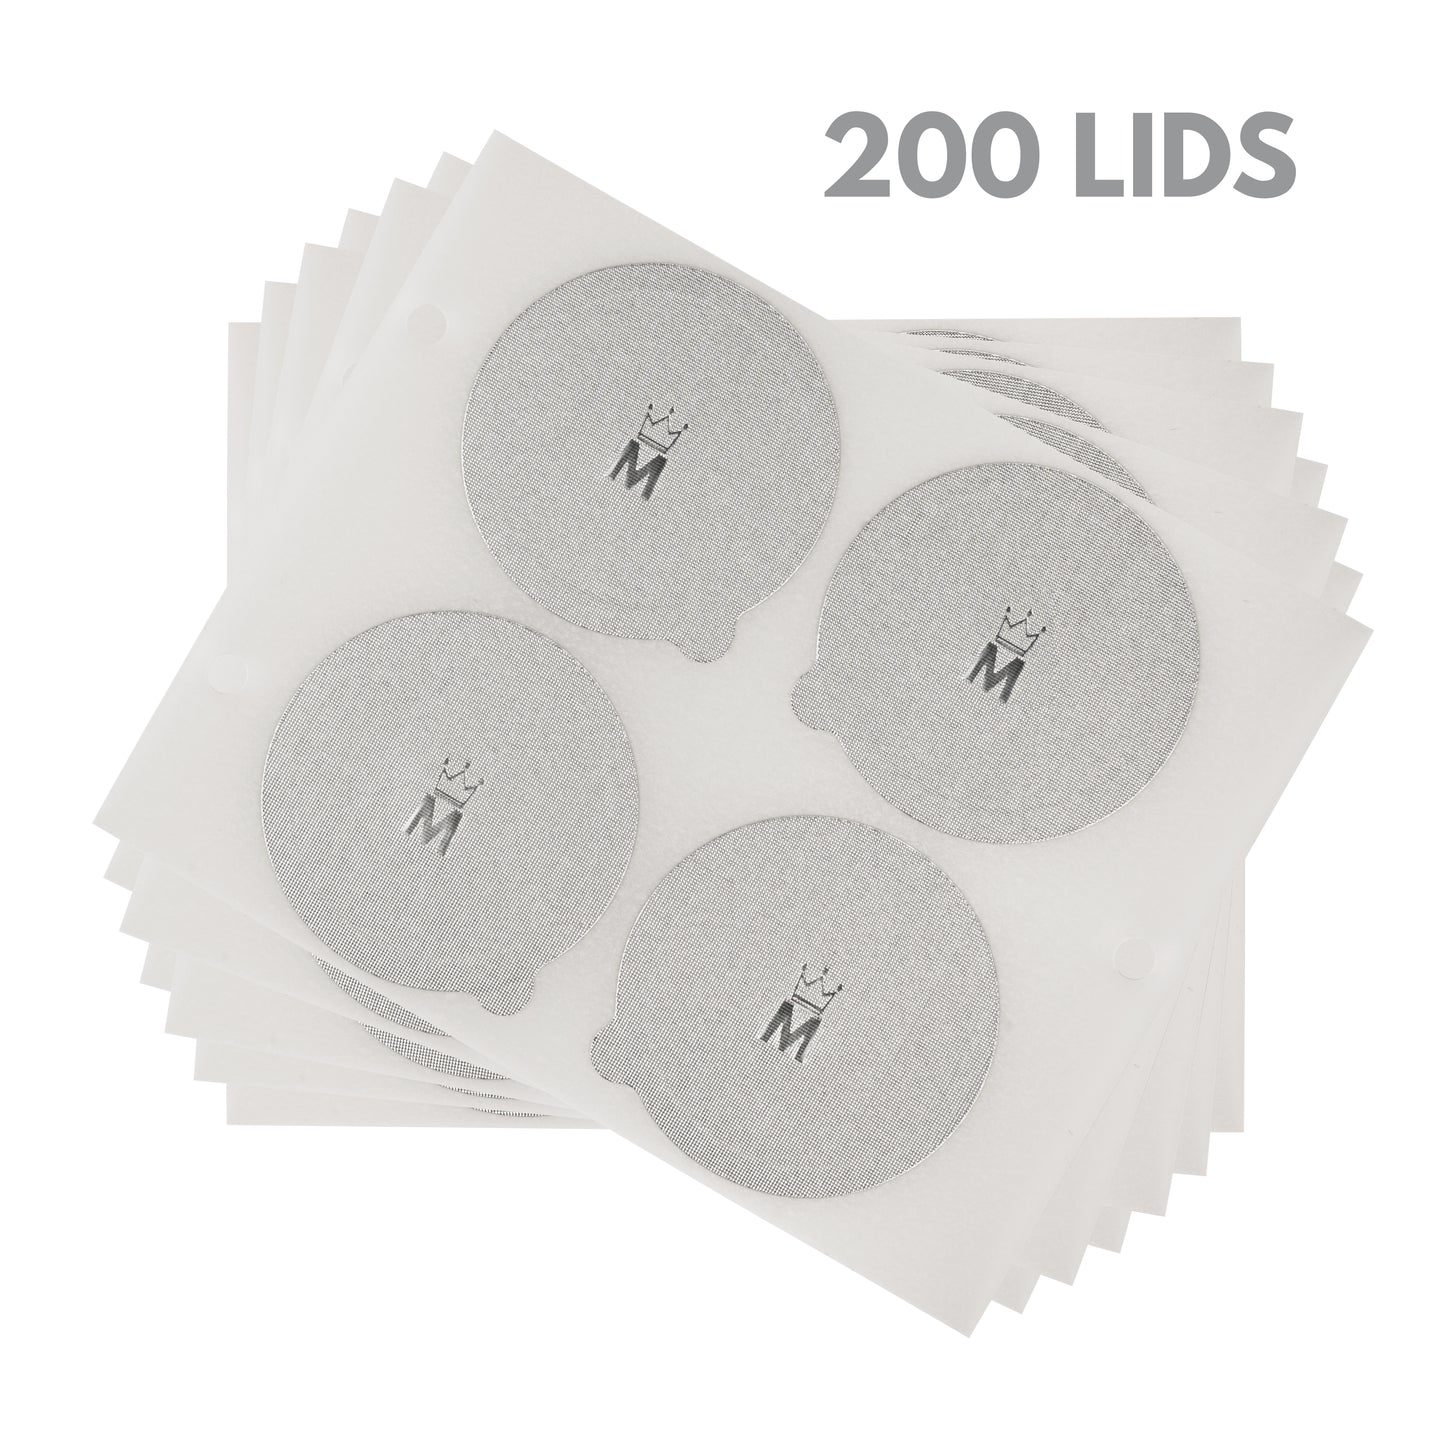 Adhesive Aluminium Lids for Compatible Nespresso - Pack of 200 Lids